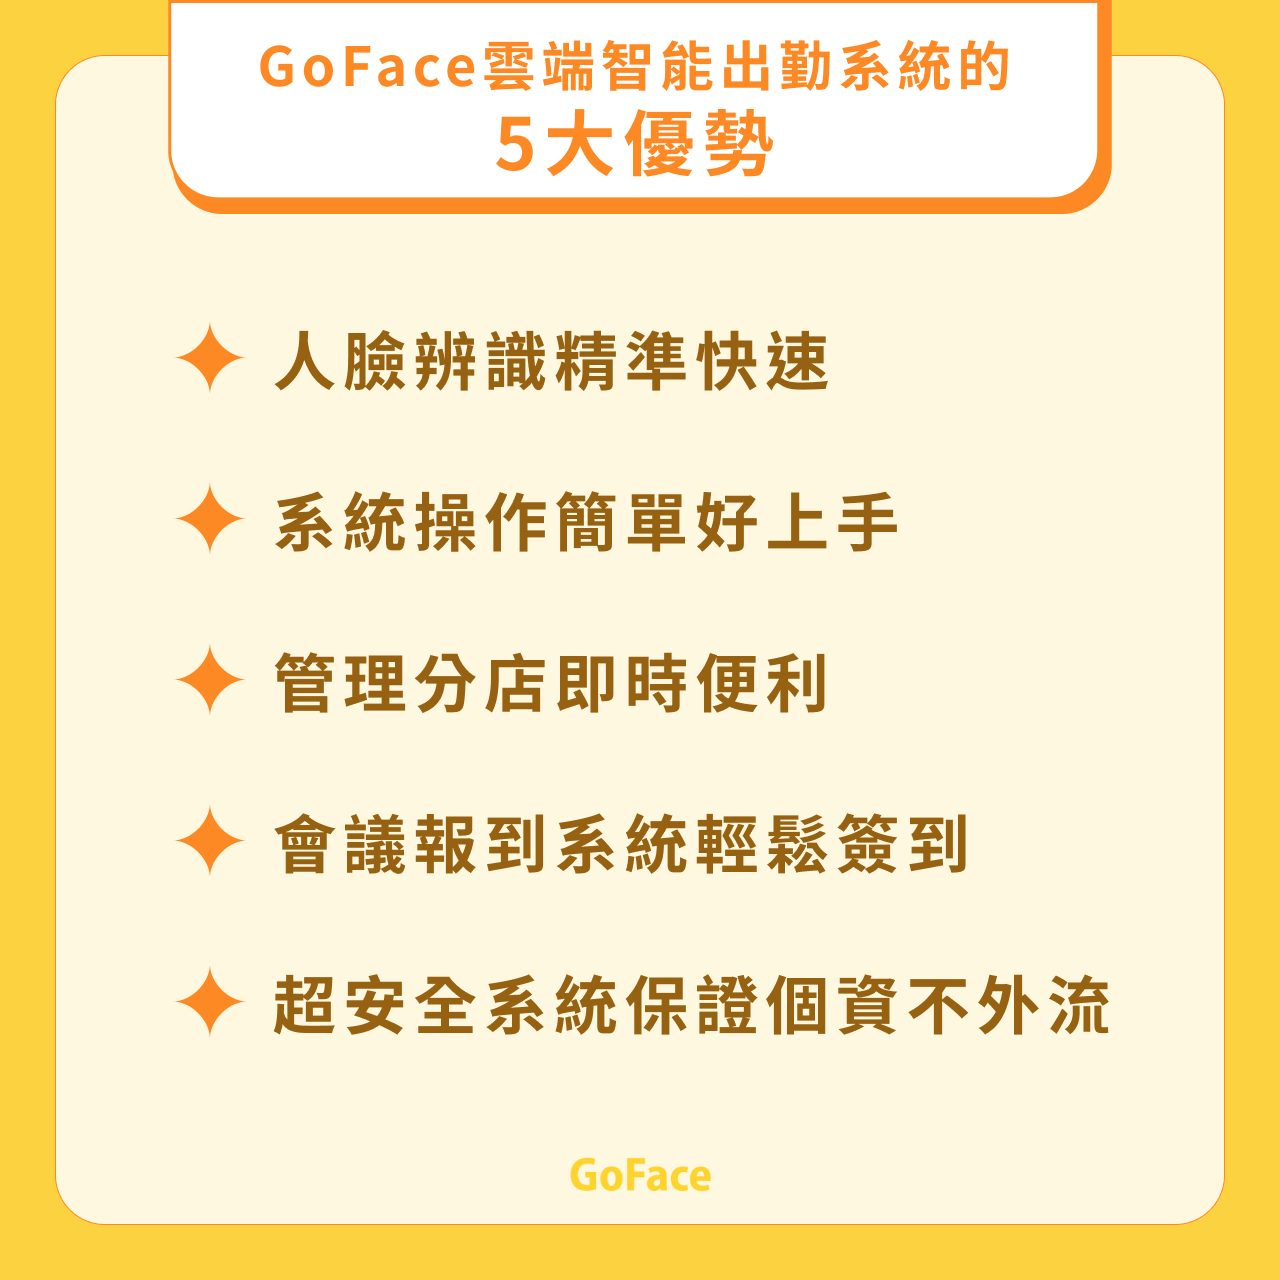 GoFace雲端智能出勤系統的5大優勢